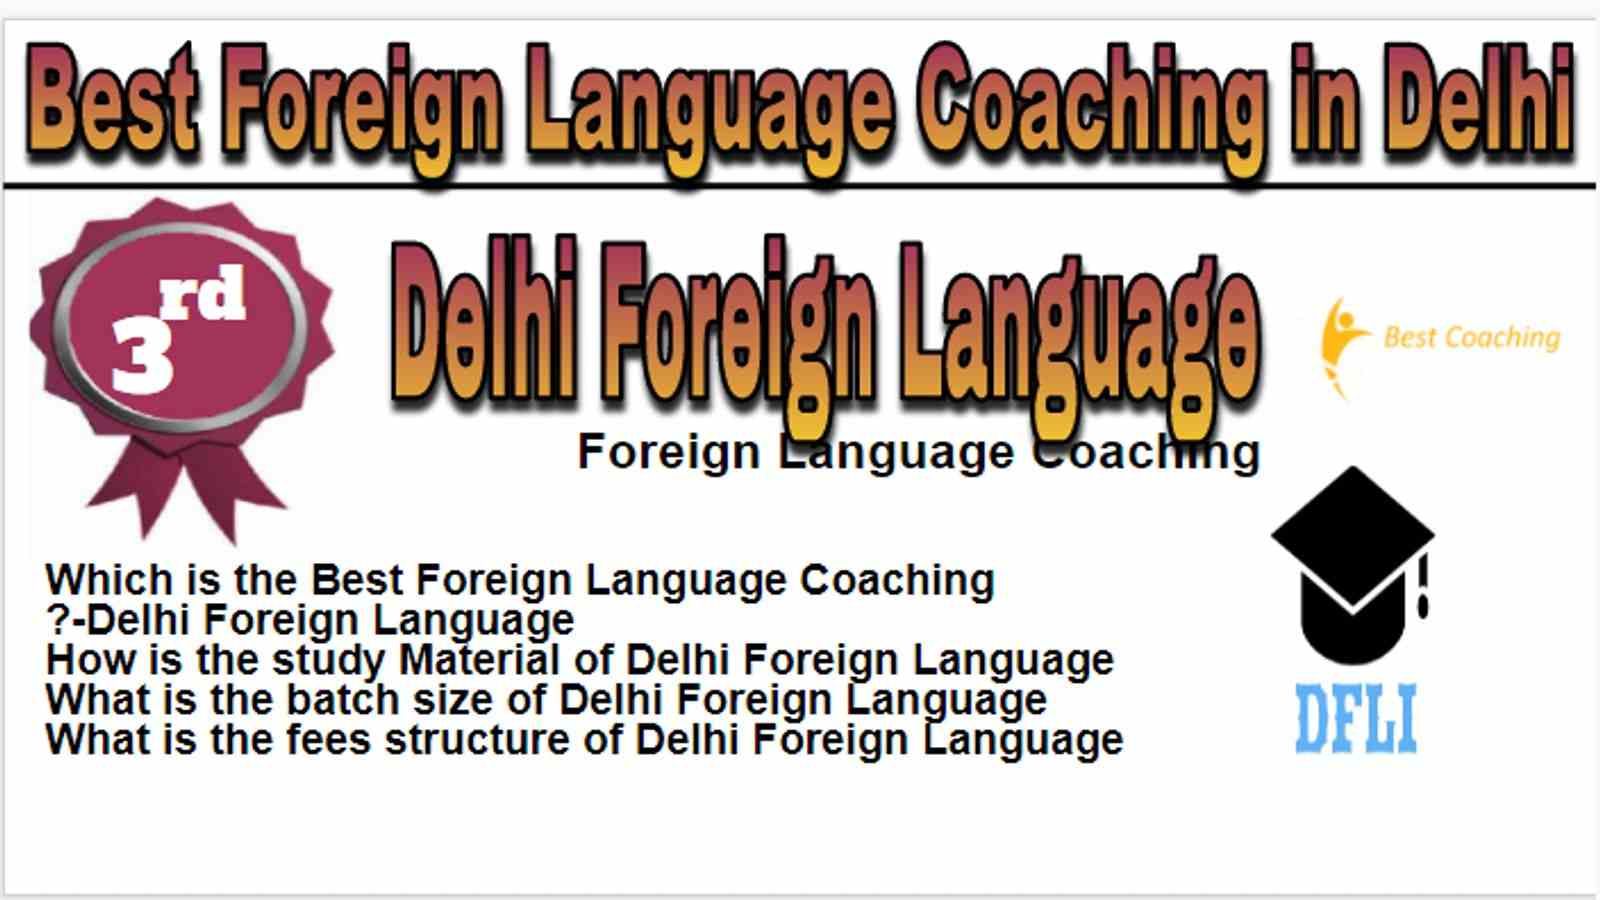 Rank 3 Best Foreign Language Coaching in Delhi